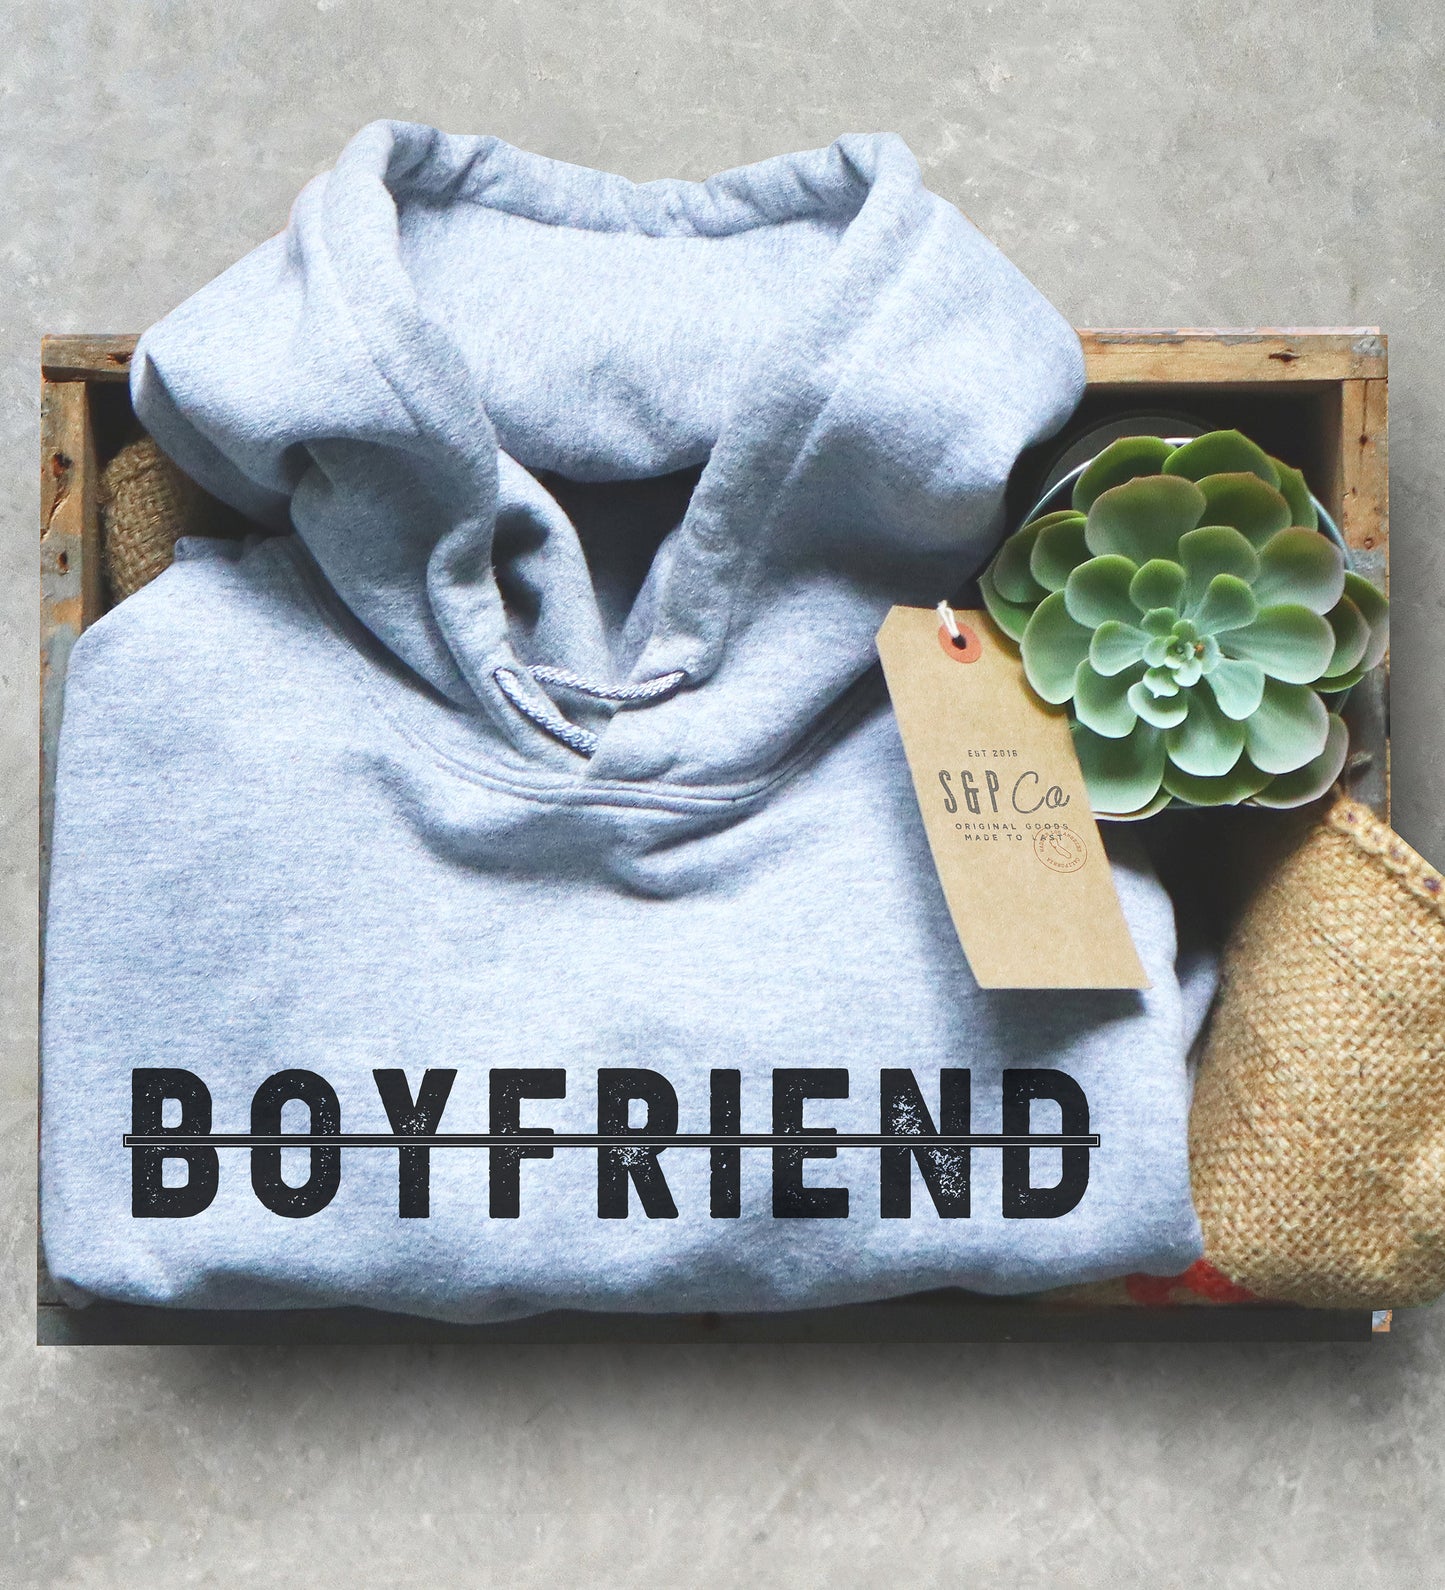 Boyfriend Fiance Hoodie - Fiancee Shirts, Engagement Gift, Fiance Tshirt, Fiancee sweatshirt, Fiance Hoodie, Engagement Party Shirt